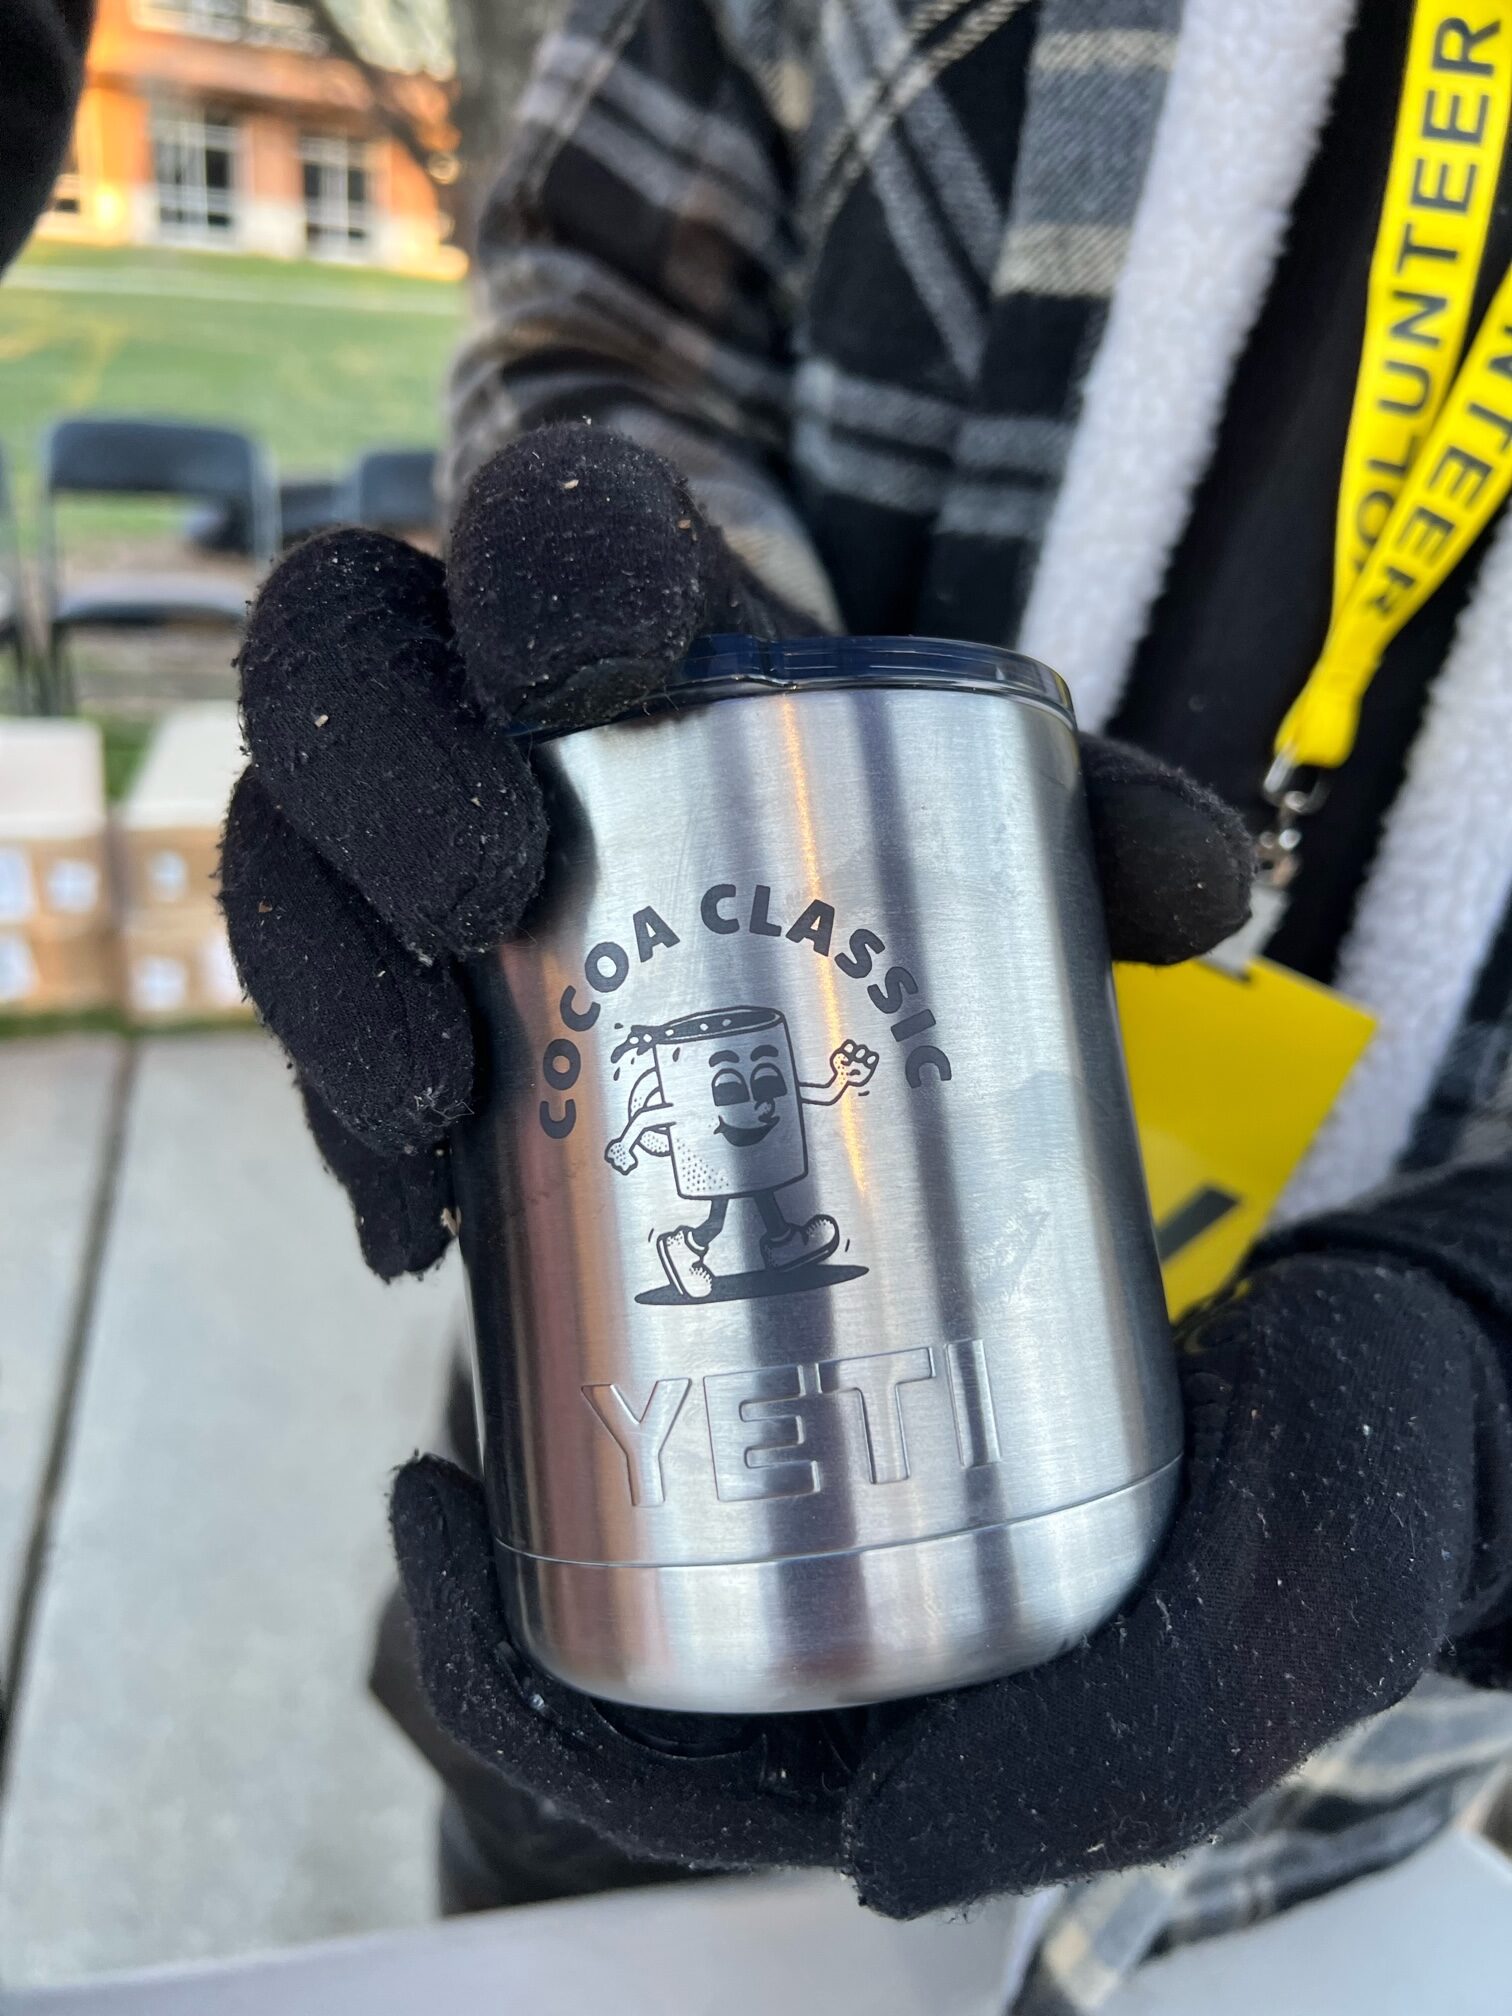 Each runner received a Cocoa Classic Yeti mug